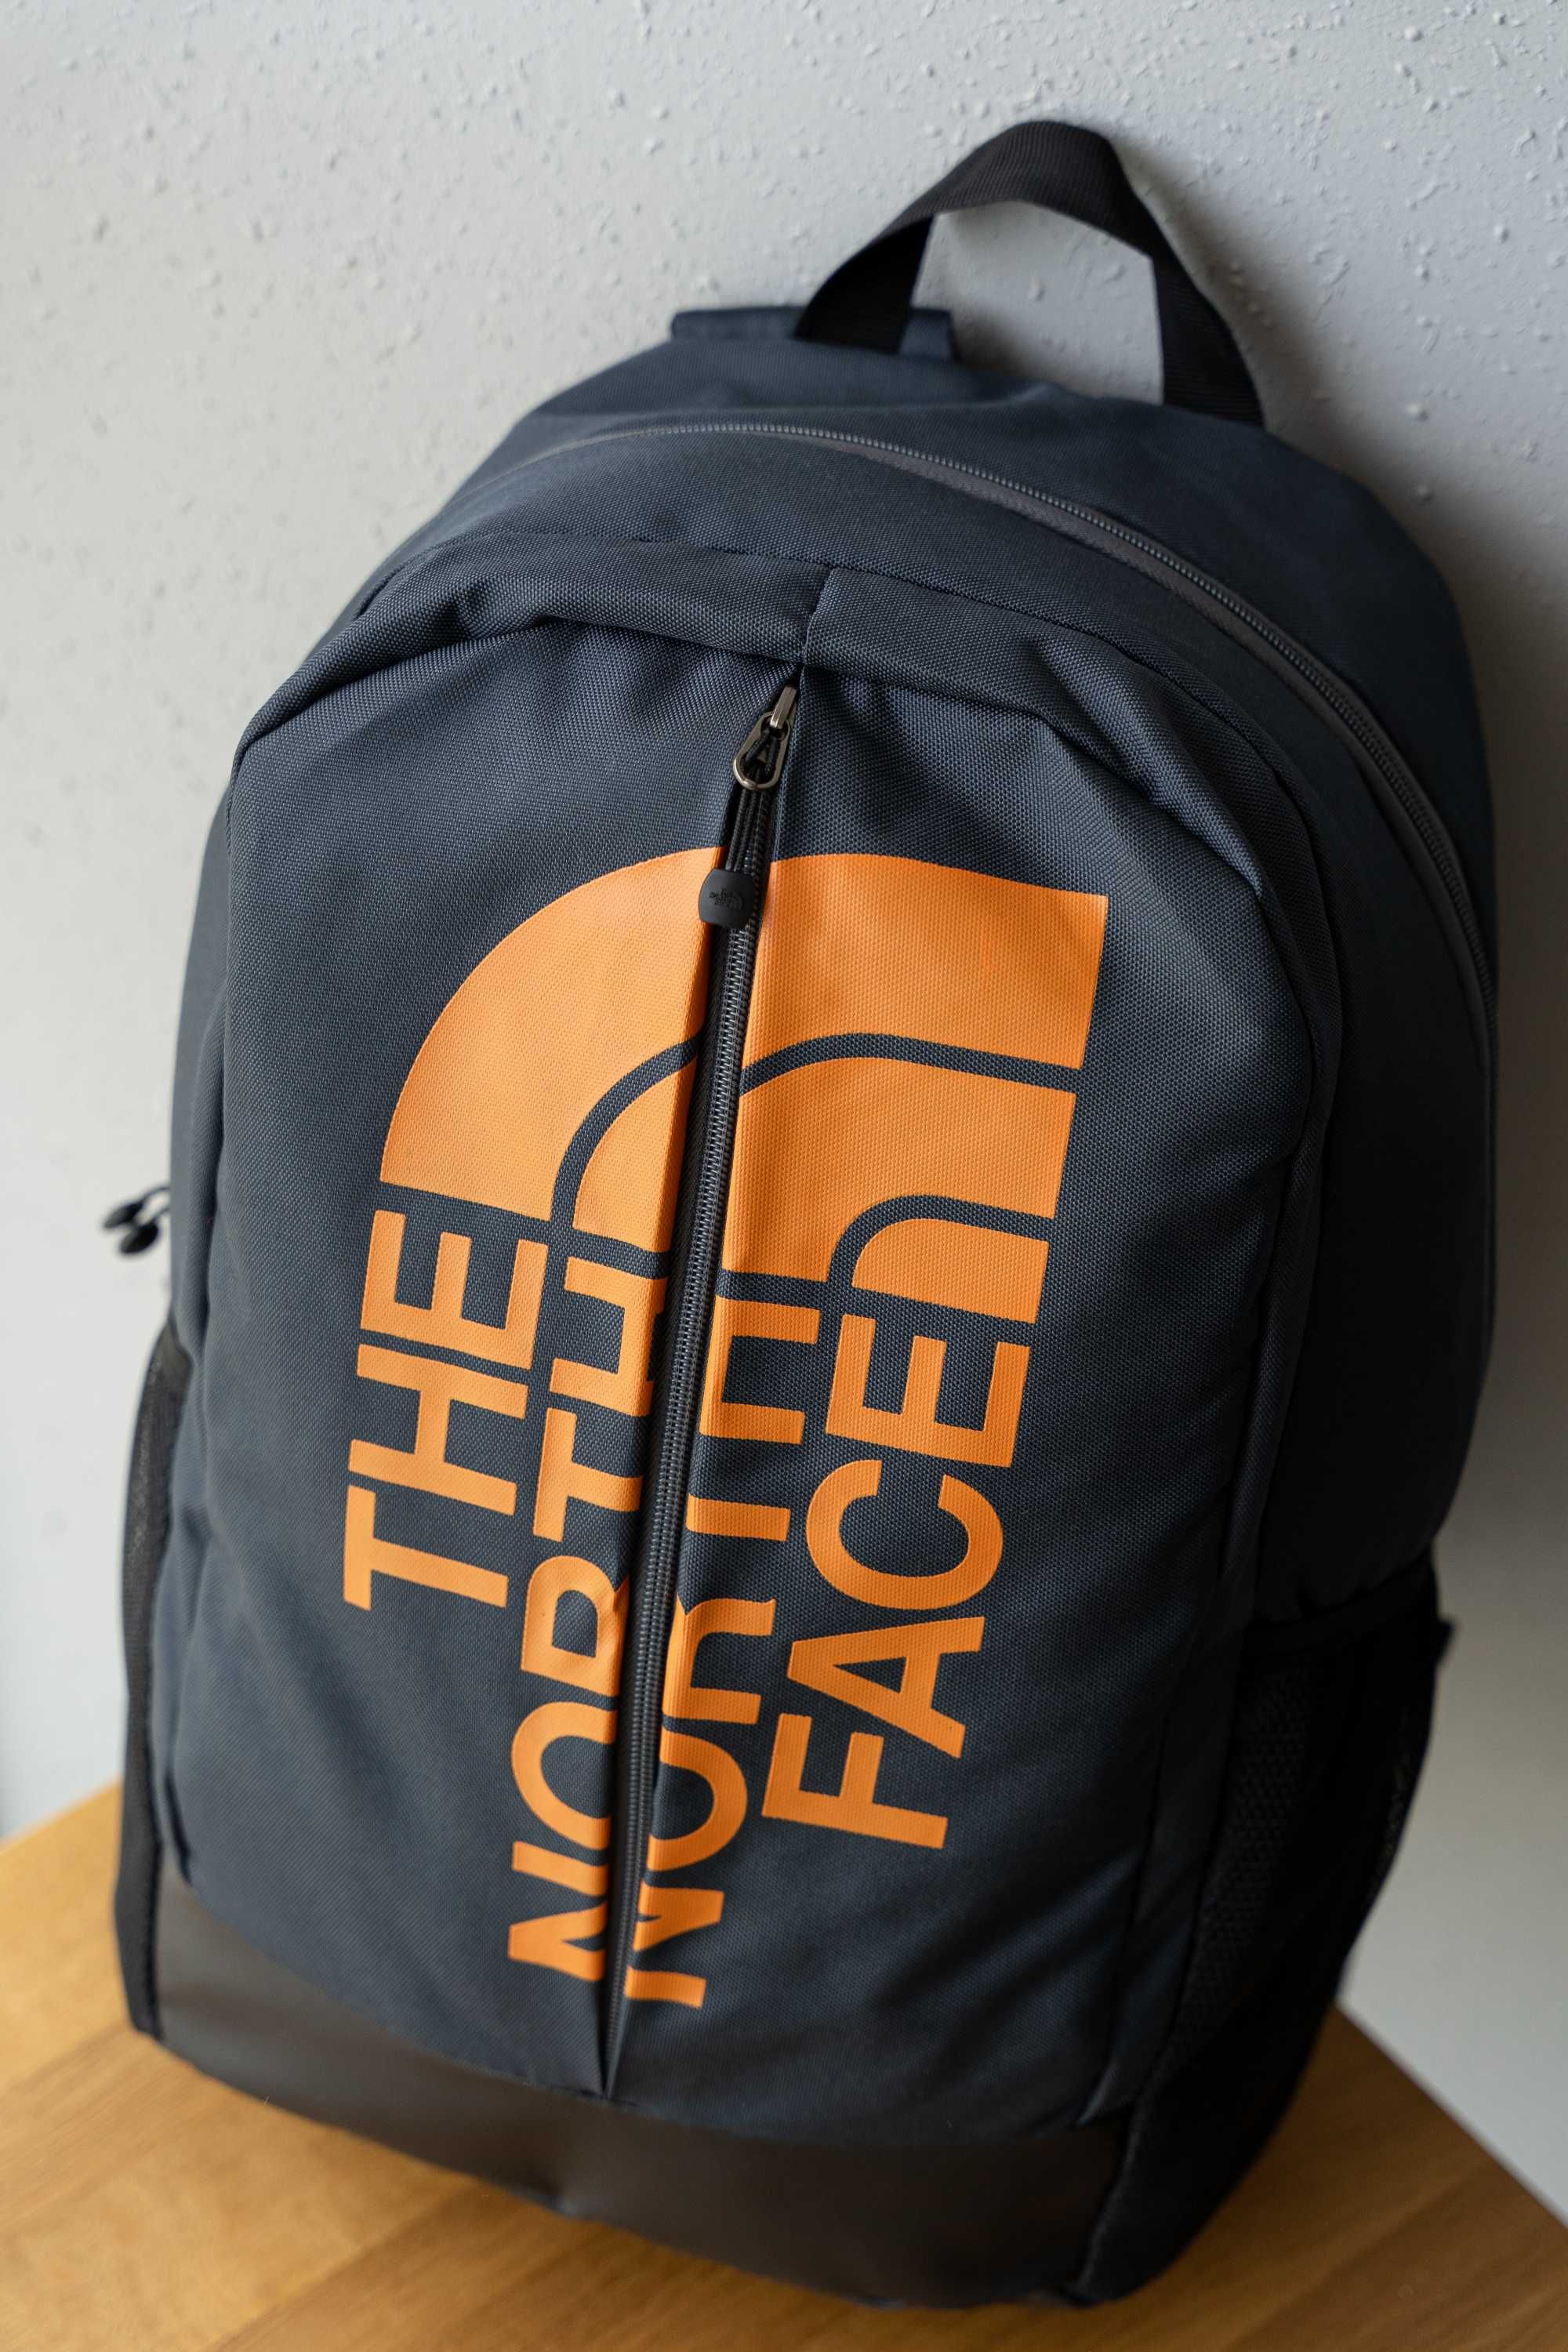 Рюкзак The North Face/Міський рюкзак/Спортивный рюкзак/Для путешествий